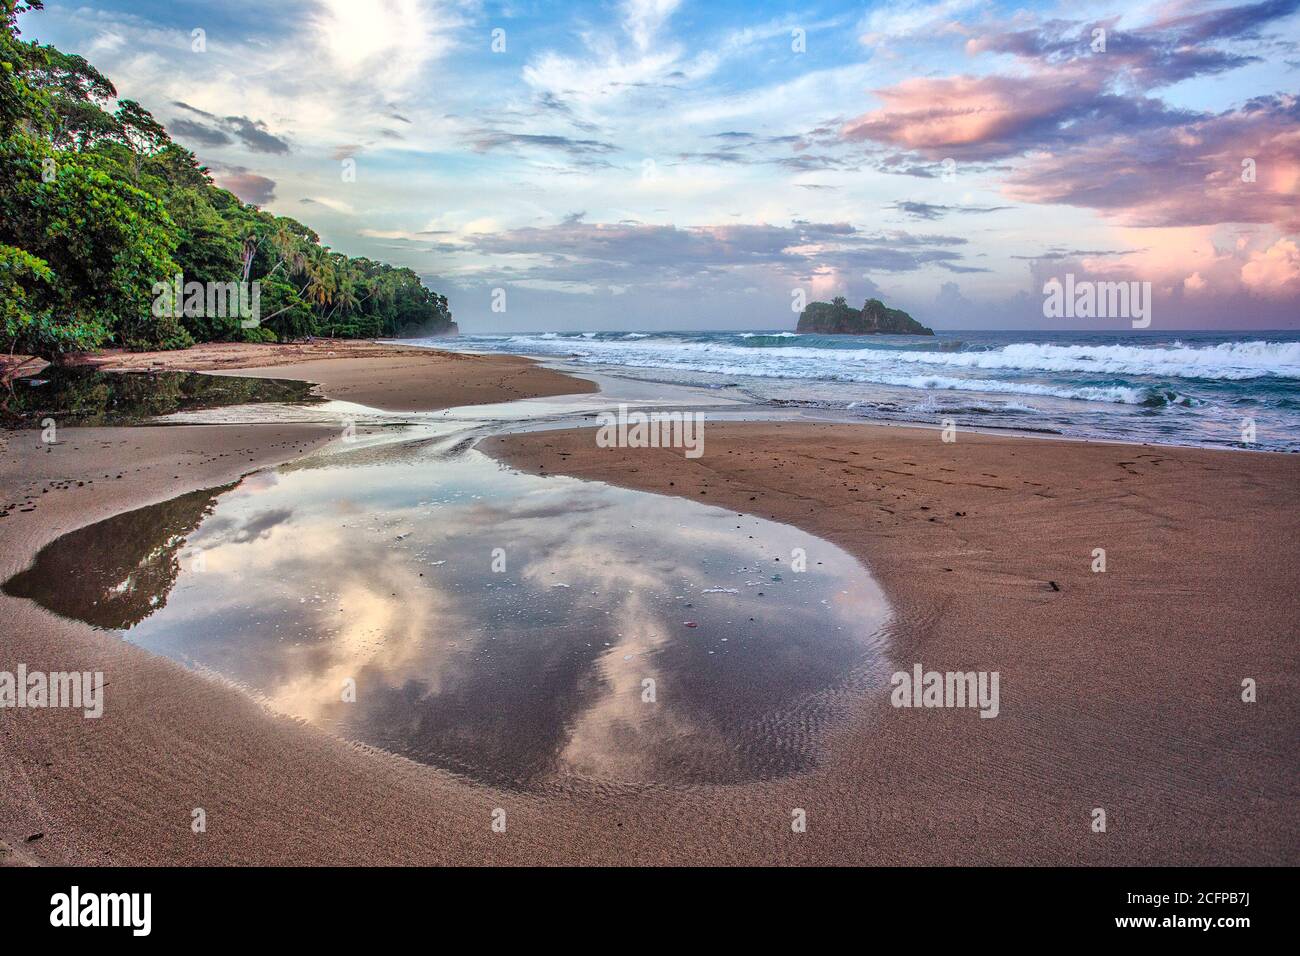 ©Jarmila ☼ ☼ ☼ Pura Vida, Costa Rica dream  Sand and Fun and Surfing in Puerto Viejo  © Jarmila Stock Photo